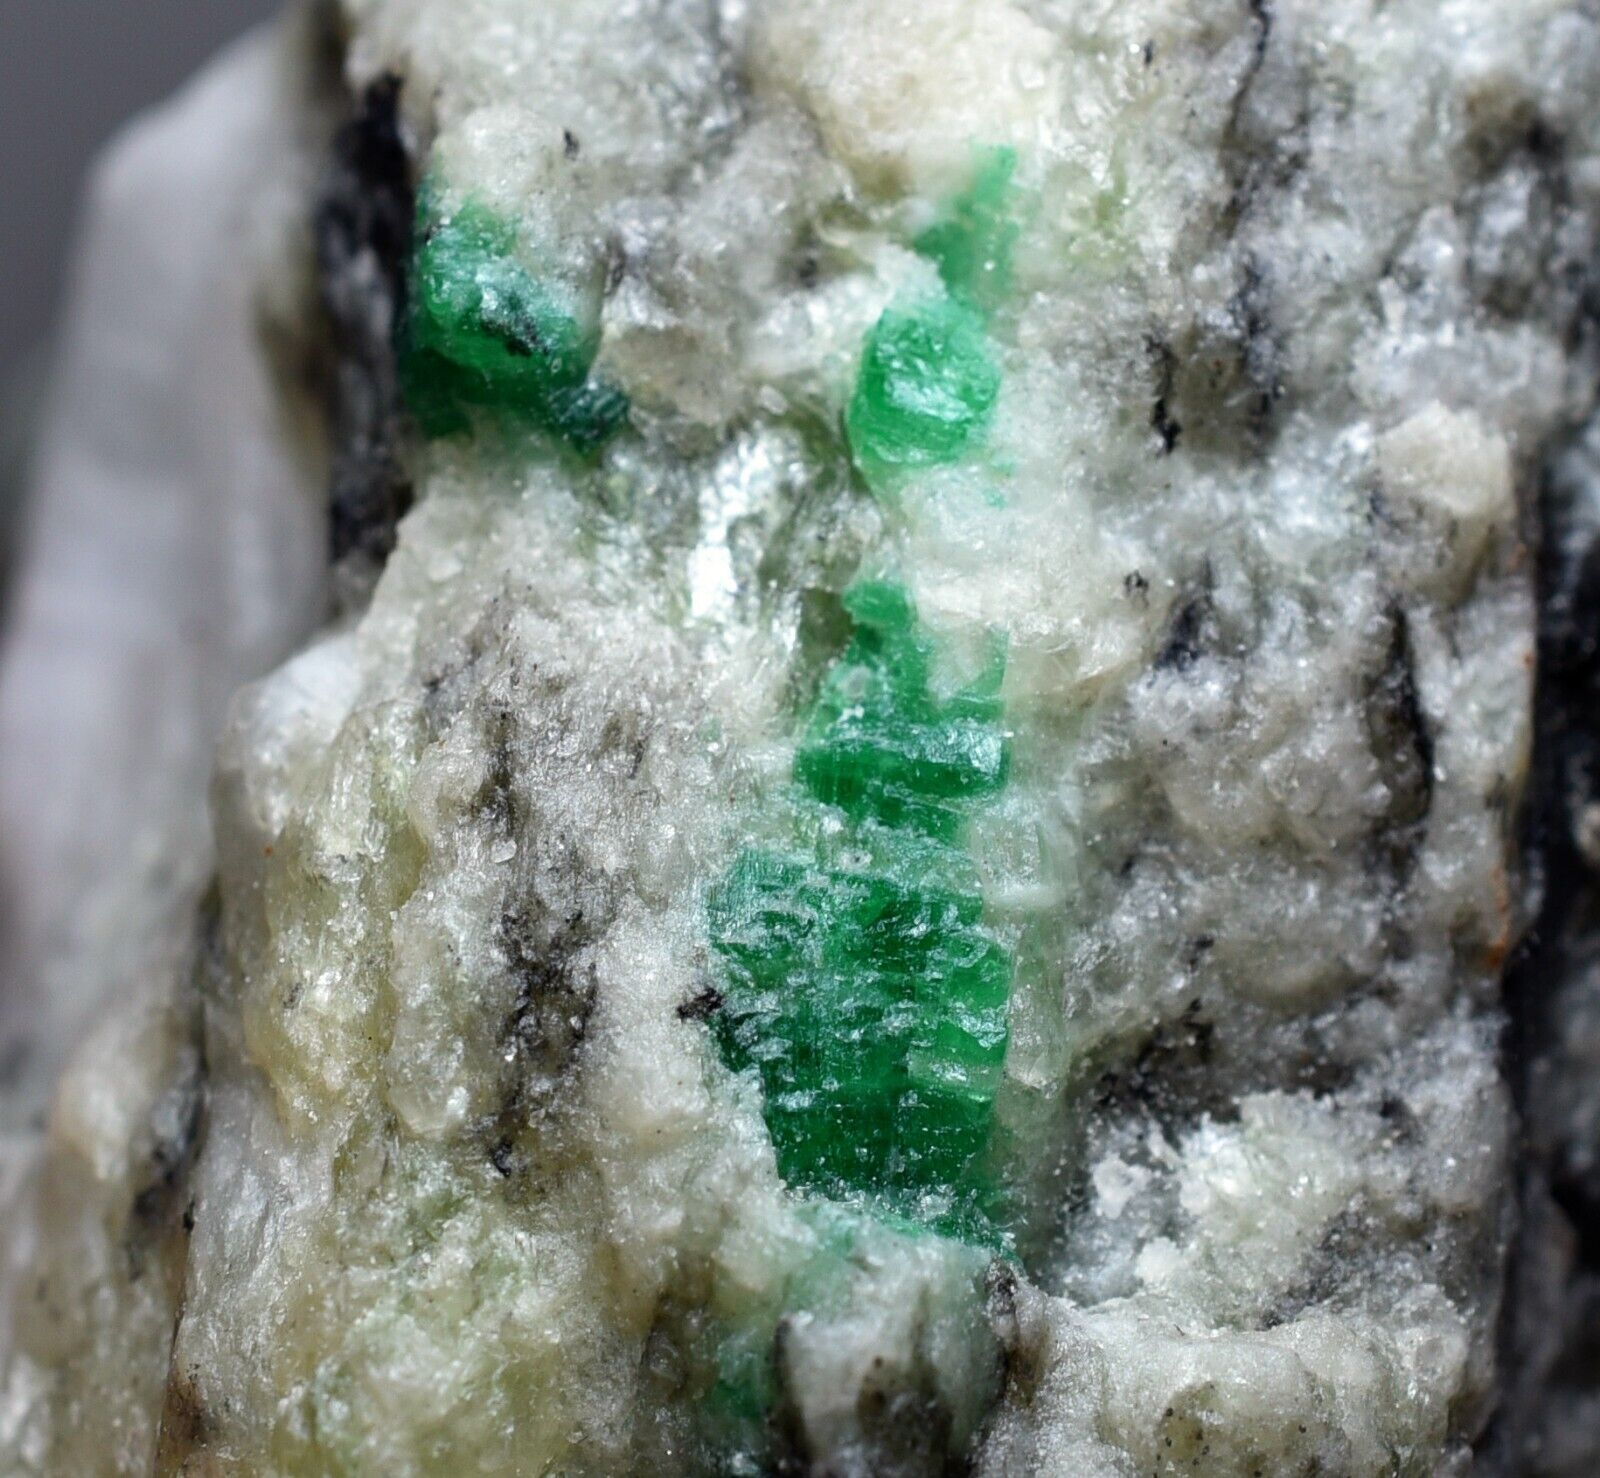 529GM Terminated Natural Green Emerald Crystals On Quartz Specimen Swat Pakistan